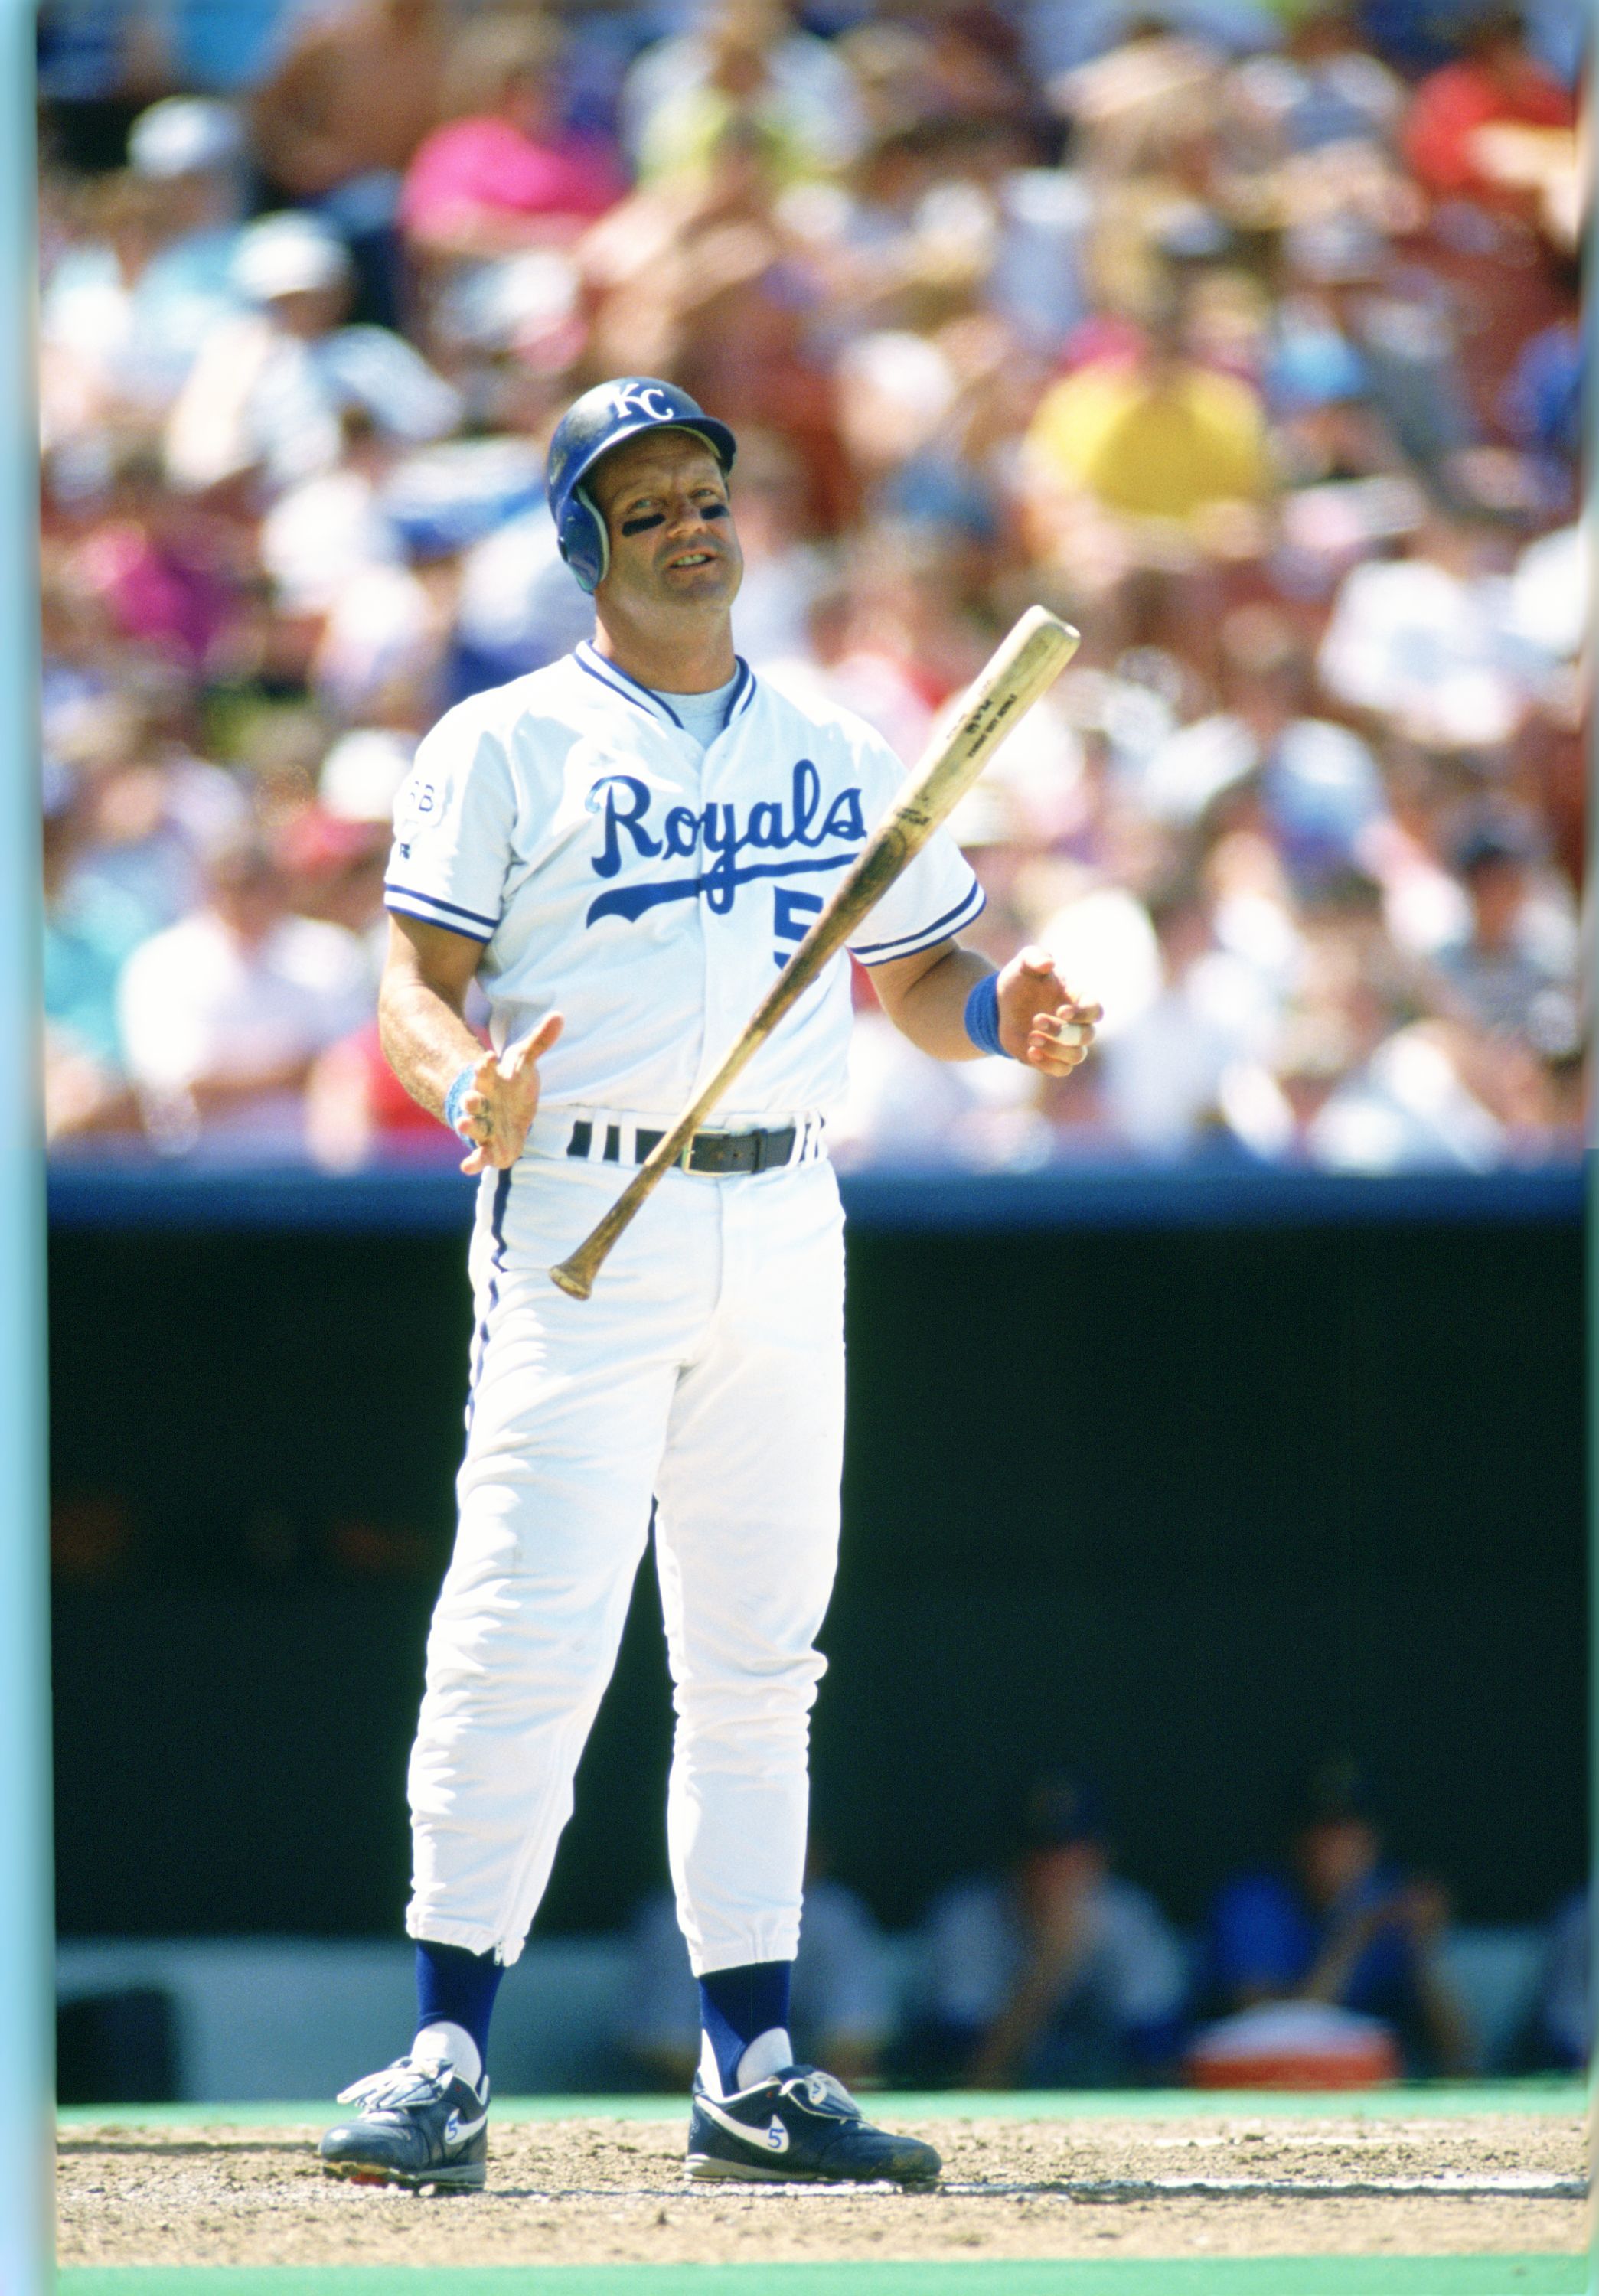 1980 George Brett Game Worn Kansas City Royals Jersey. Baseball